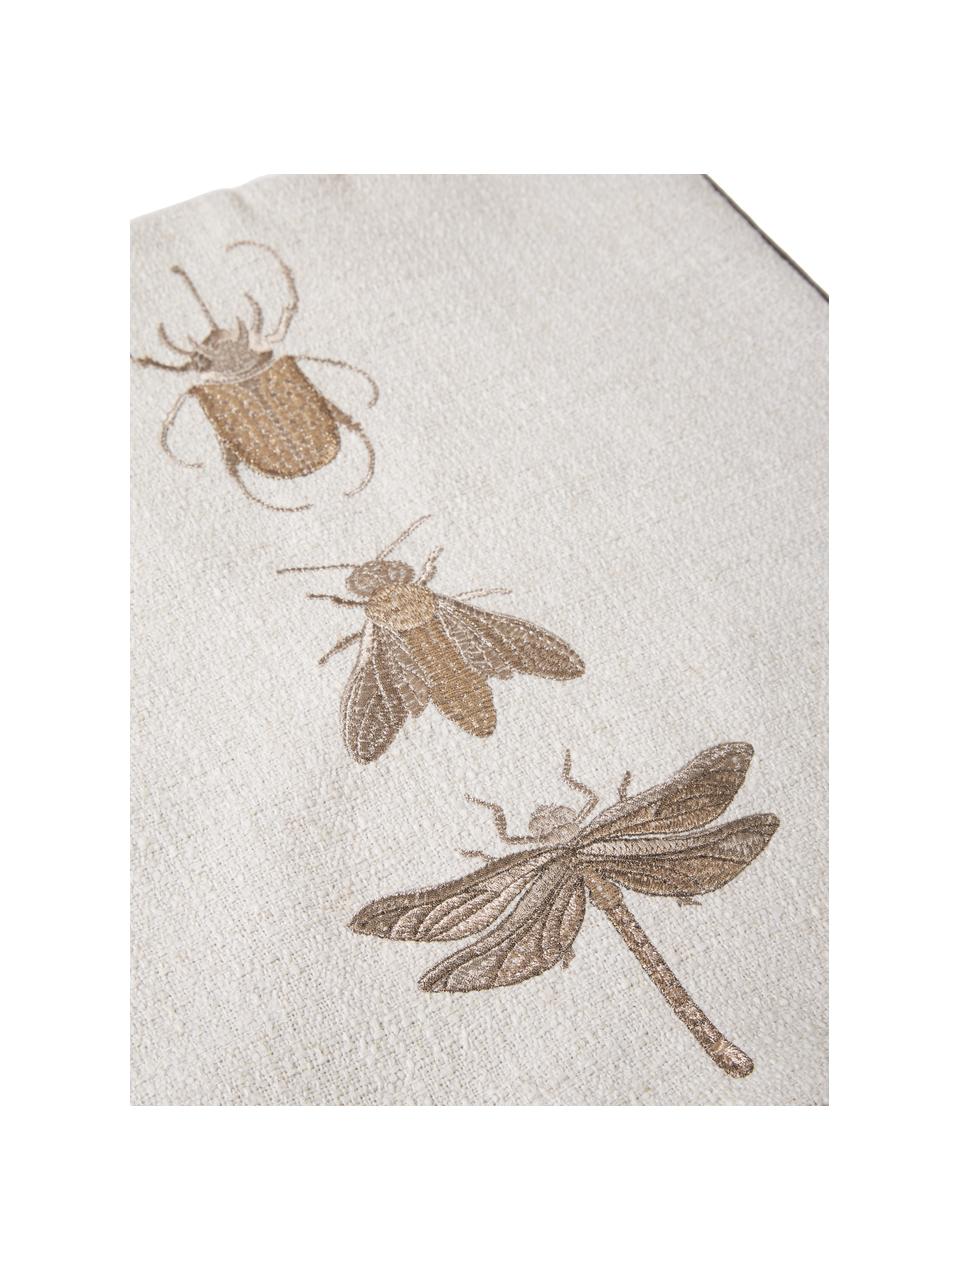 Bestickte Kissenhülle Tania mit Insekten-Motiv, 90 % Polyester, 10 % Leinen
Öko-Tex Standard 100, Klasse 1, Taupe, Beige, B 45 x L 45 cm